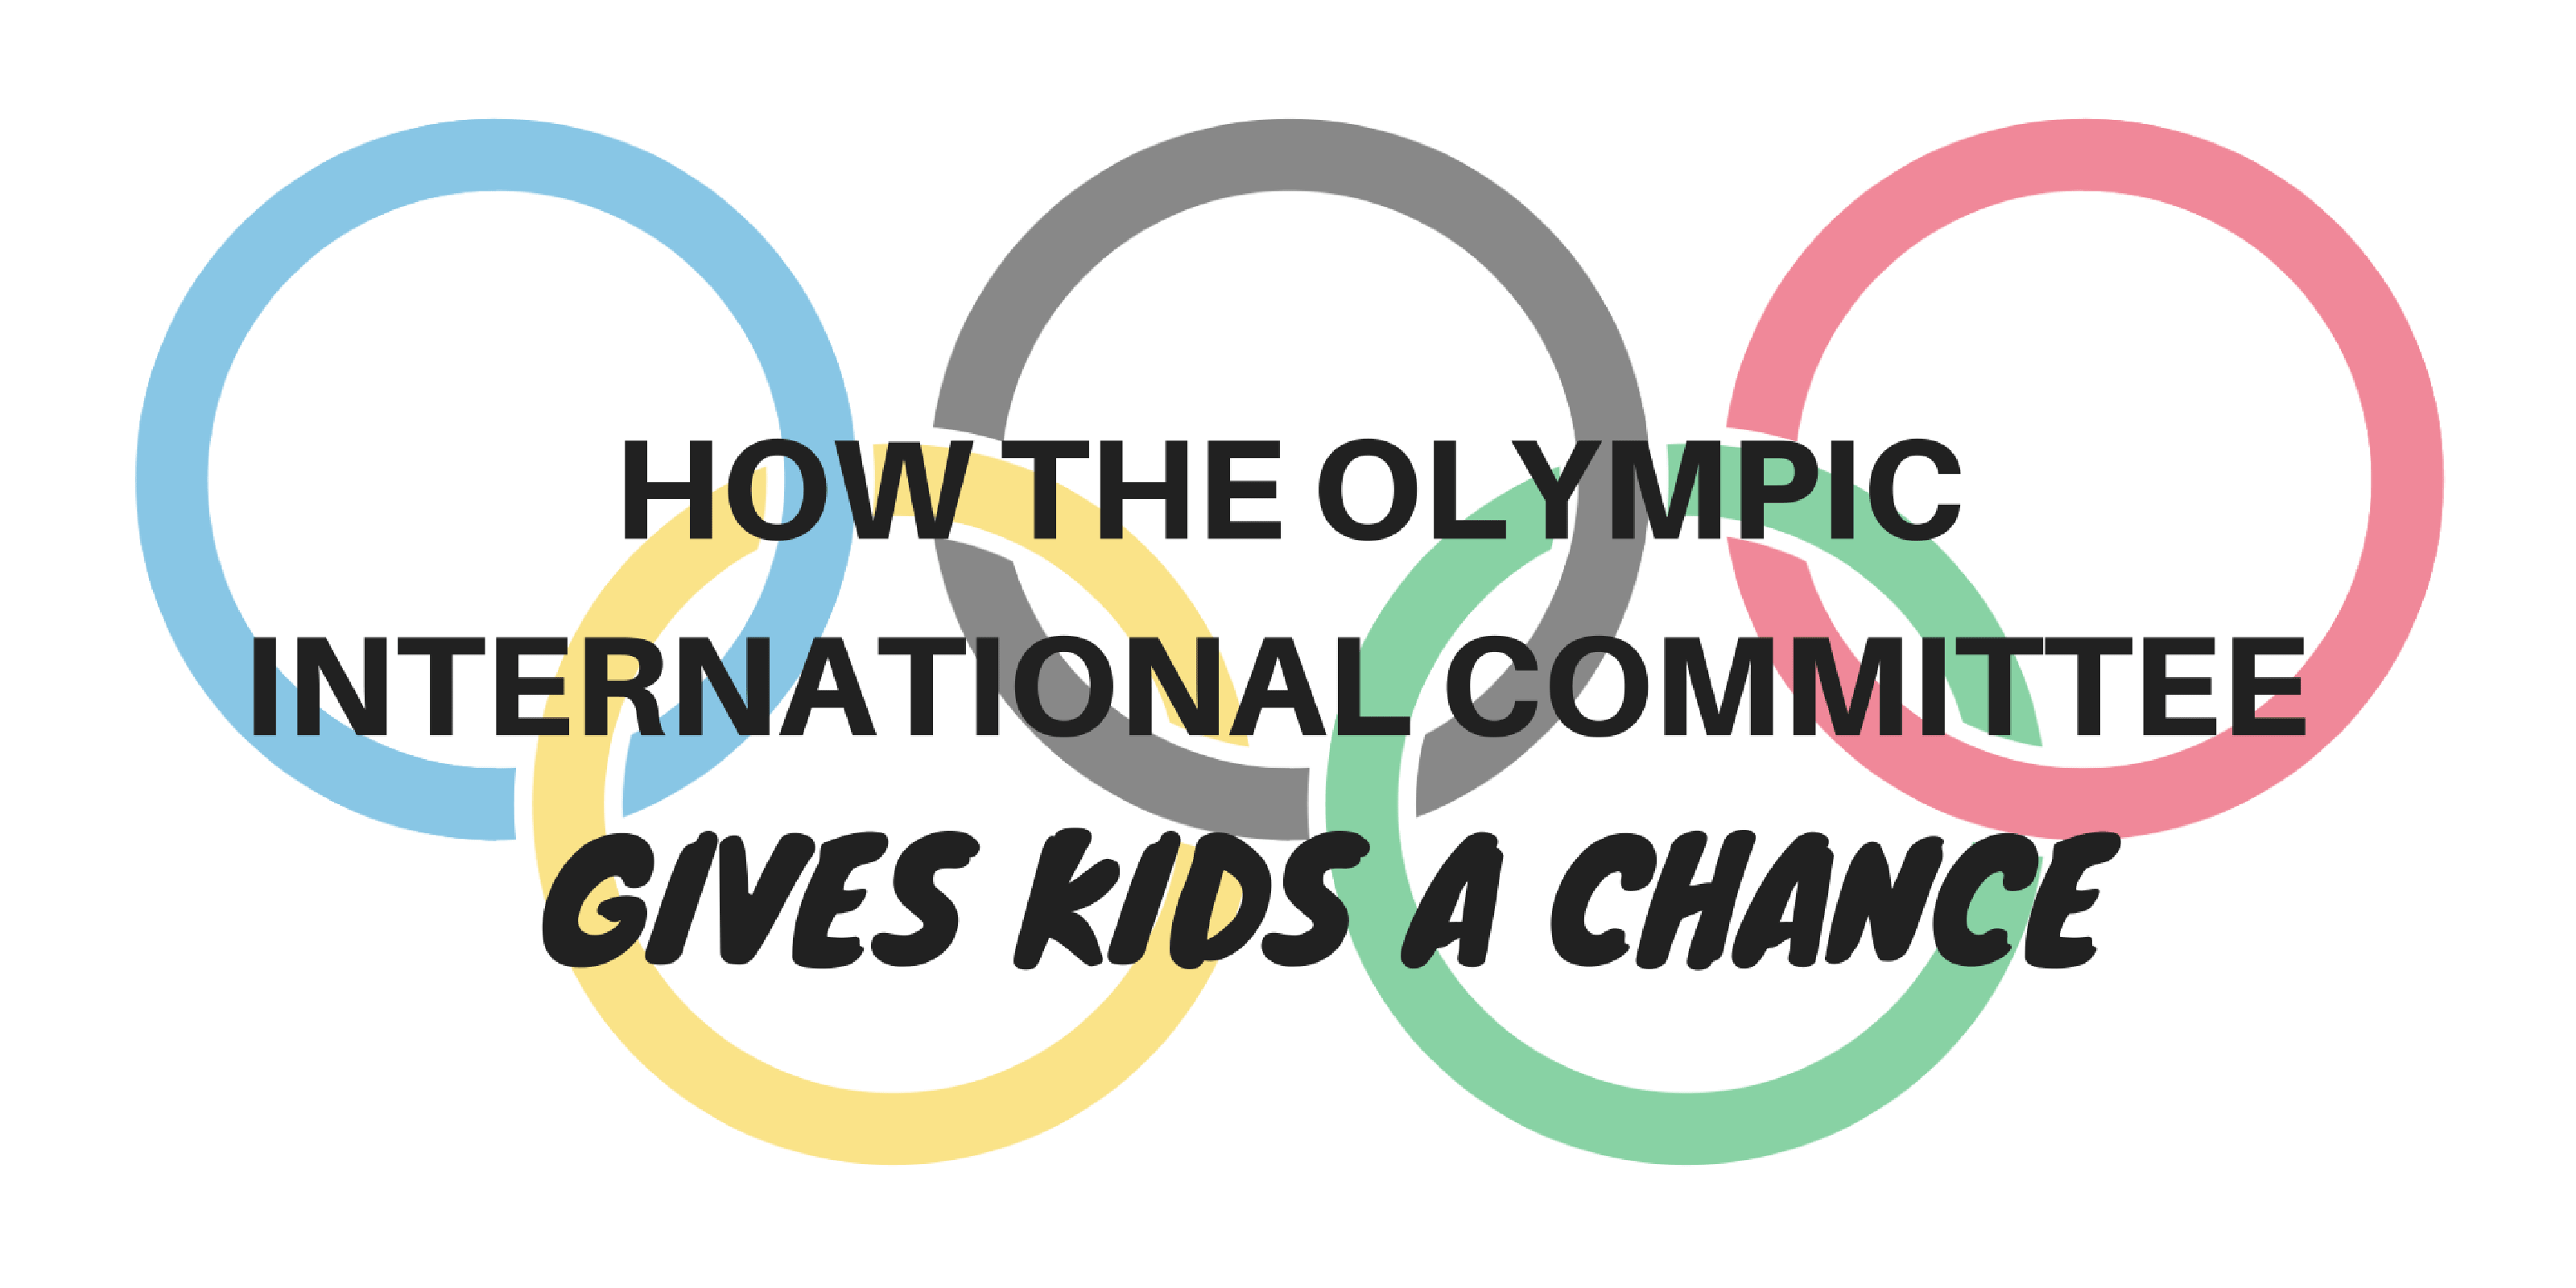 Nicholas Fainlight Olympics Gives to Kids - Title Image - Nicholas Fainlight